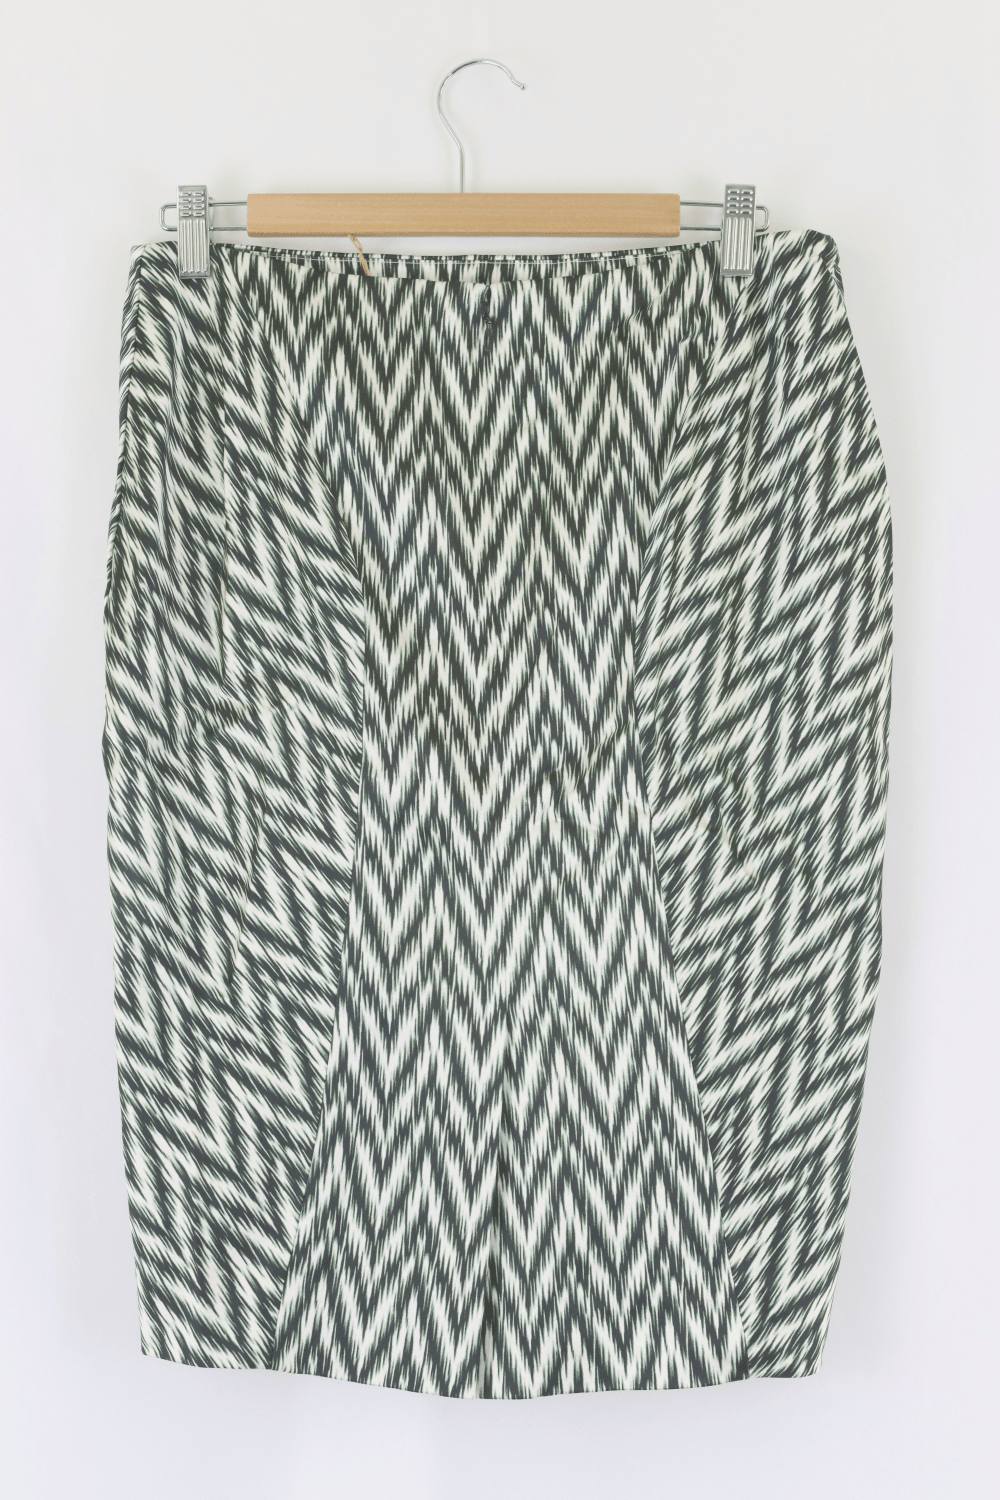 Saba Green And Black Pattern Skirt 12